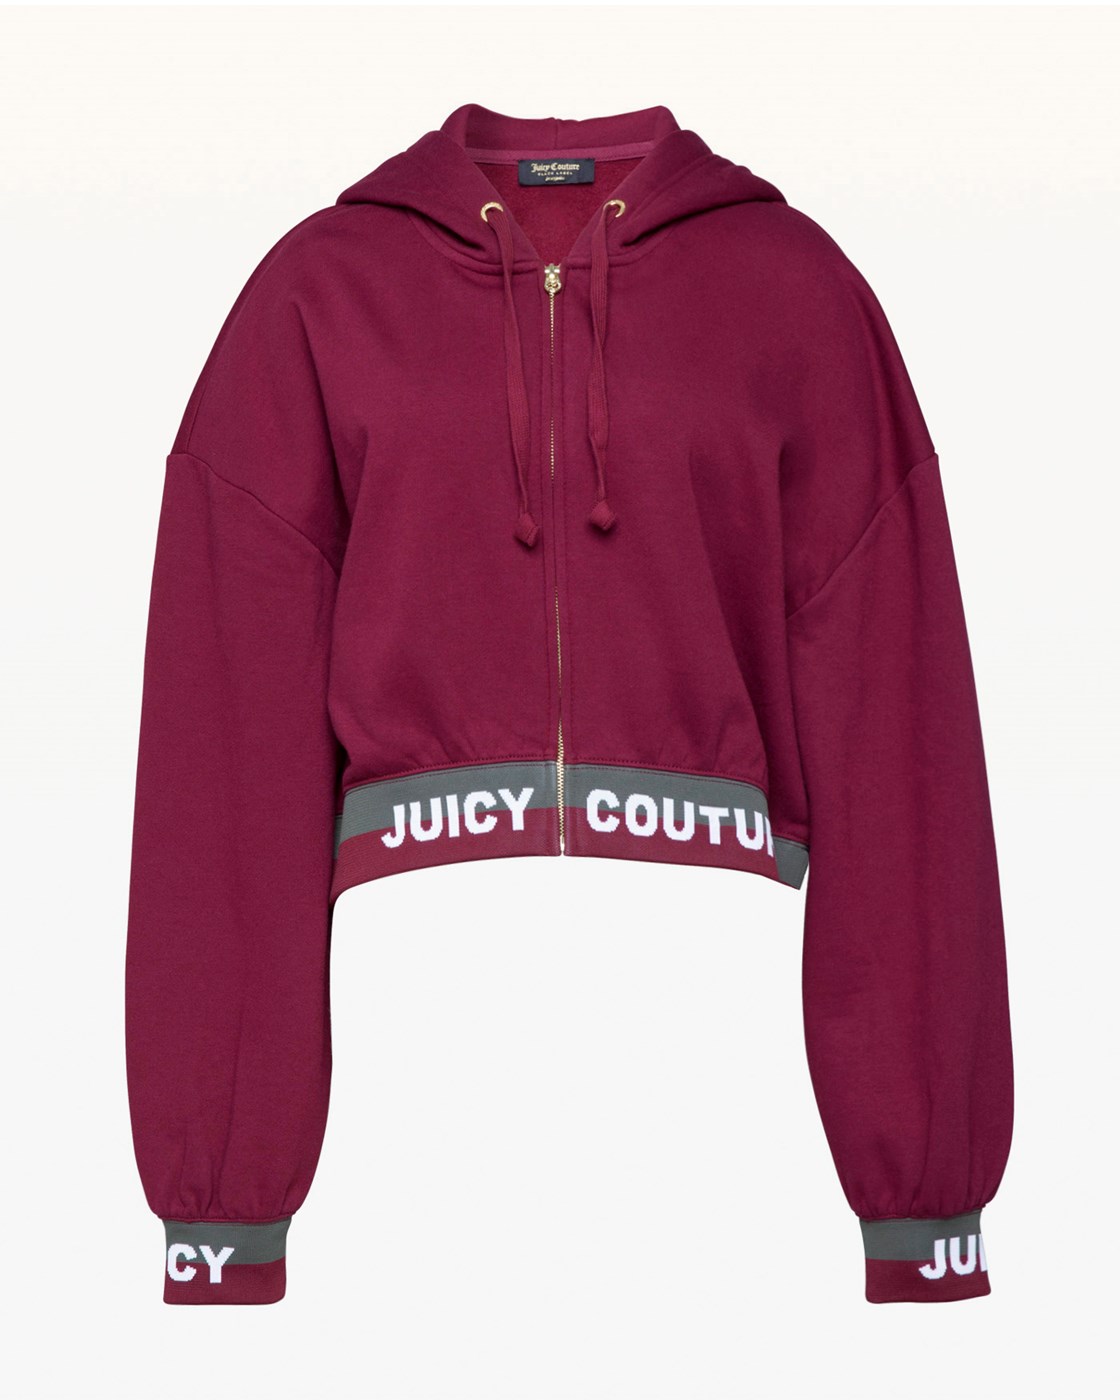 Juicy Couture Jacquard Fleece Hooded Jacket